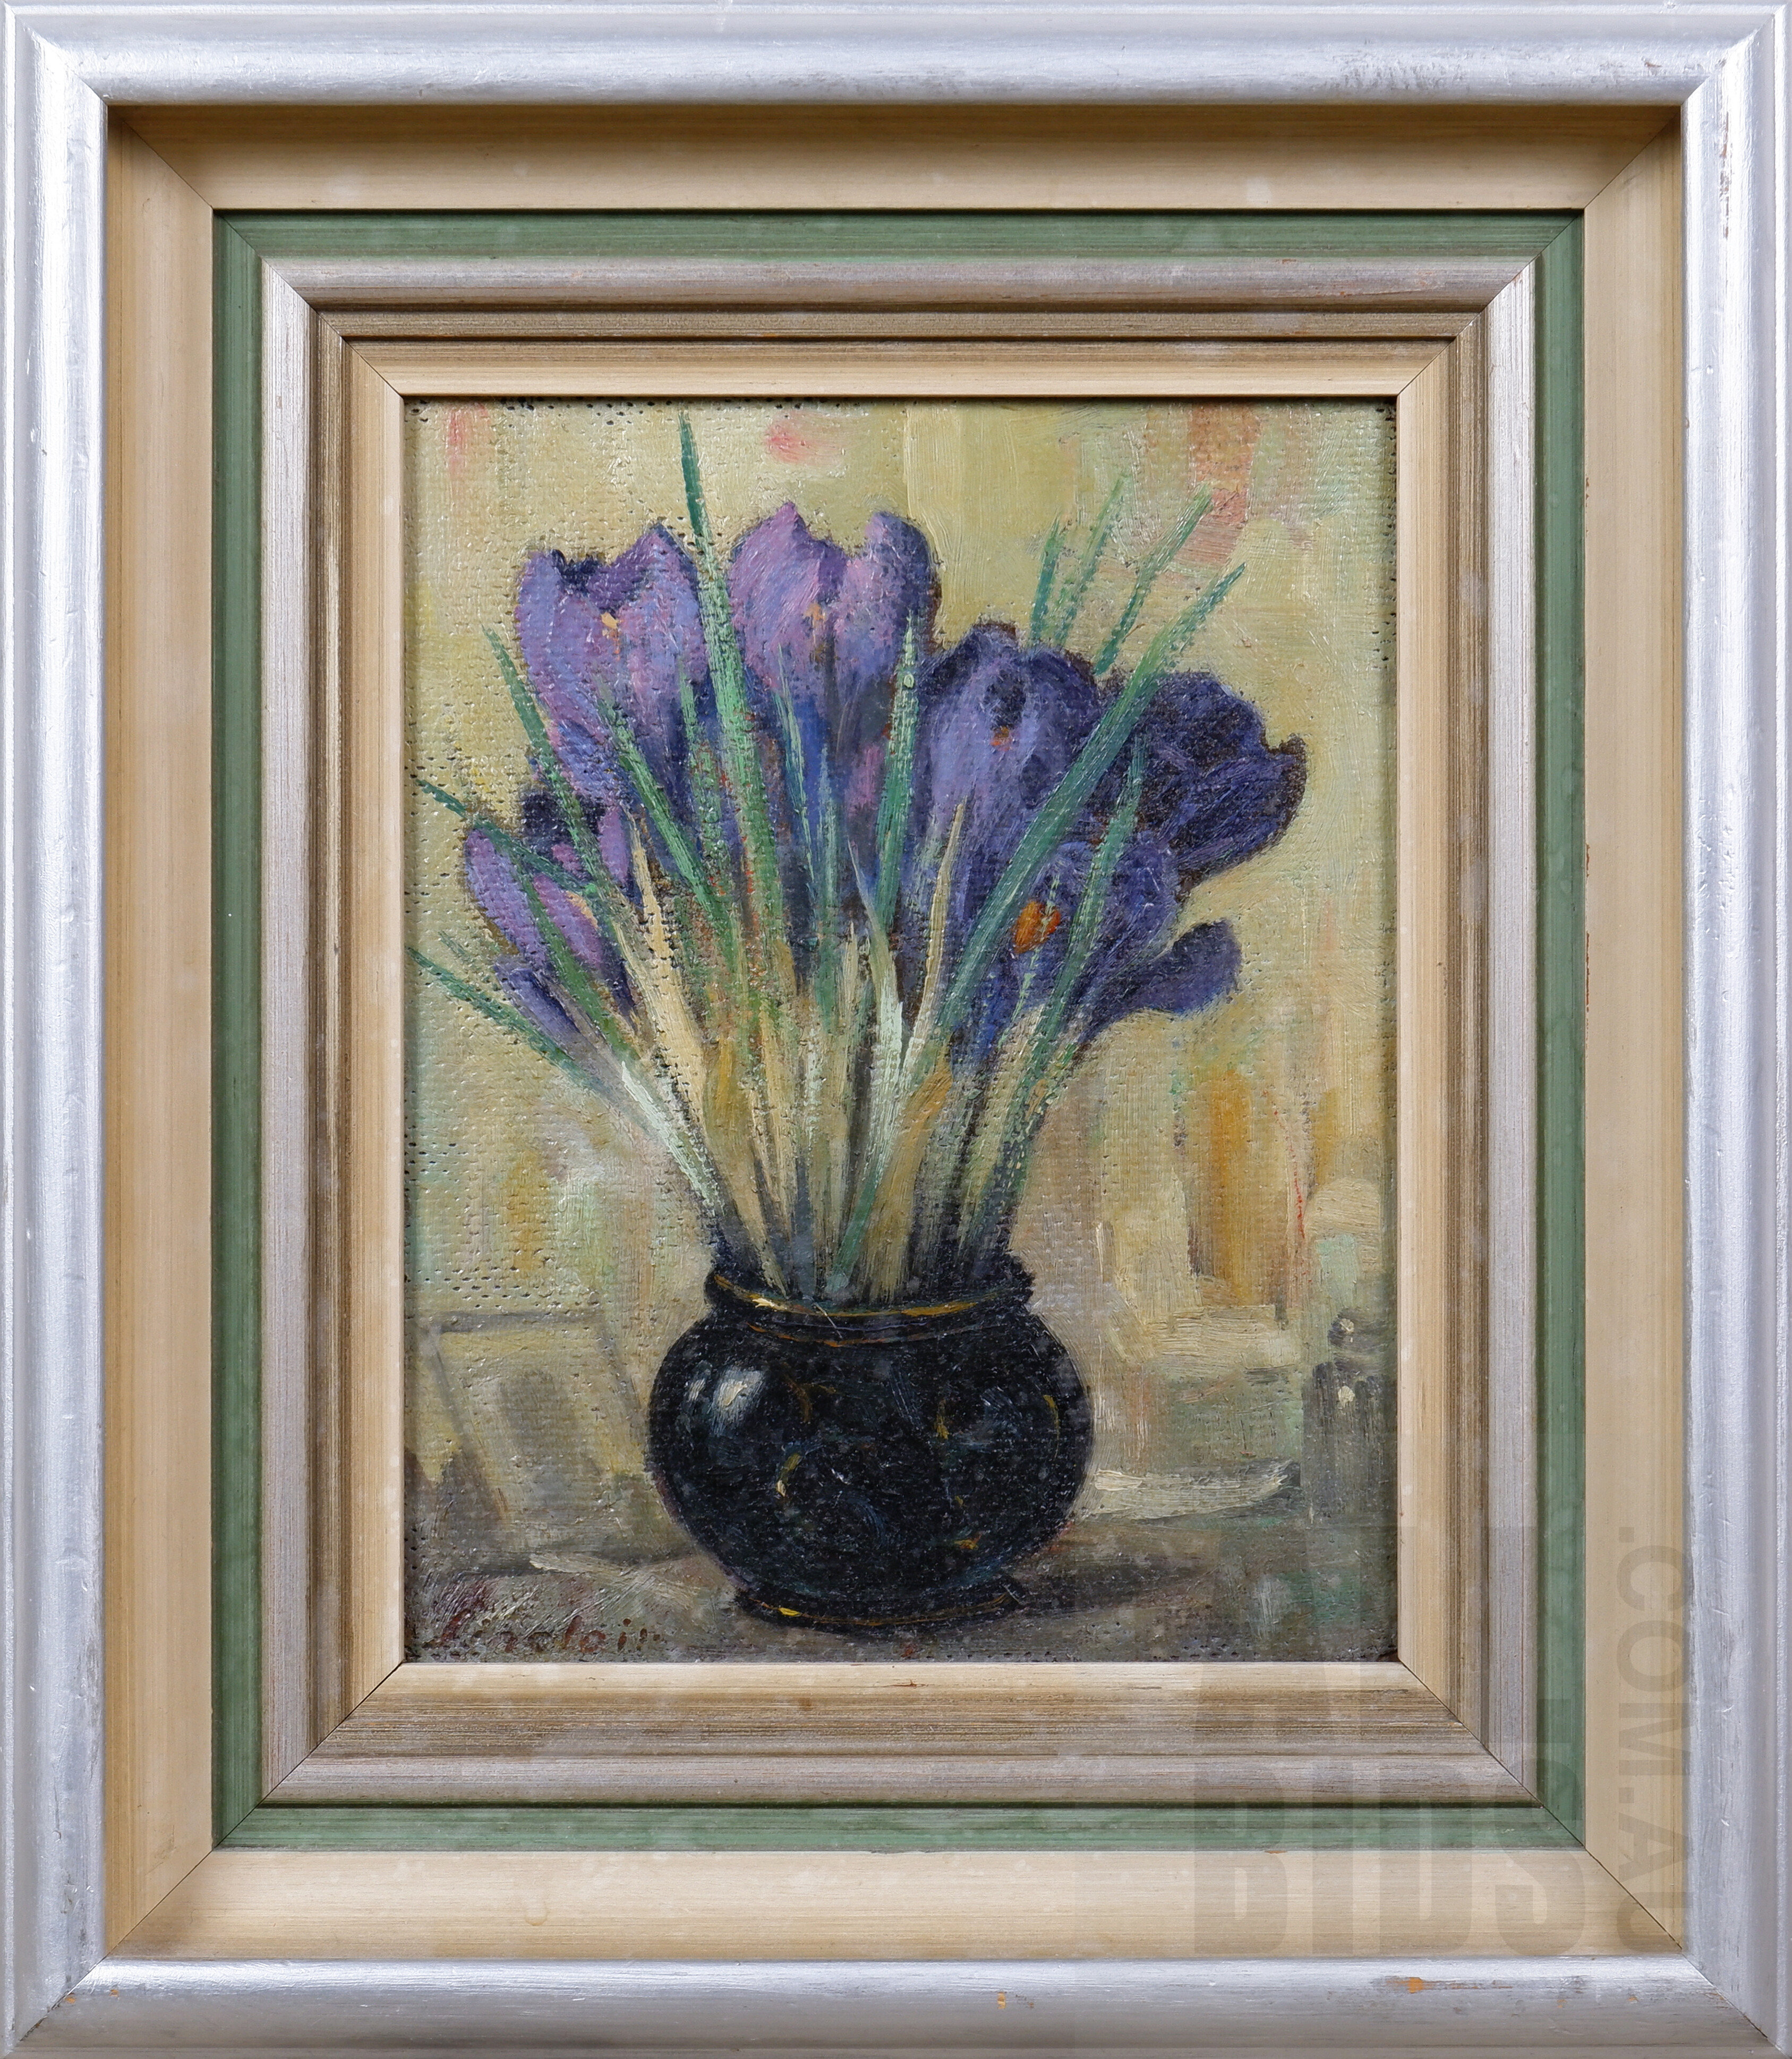 'Folke Sinclair (1877-1956, Swedish), Crocuses 1944, Oil on Panel, 37 x 31 cm (including frame)'